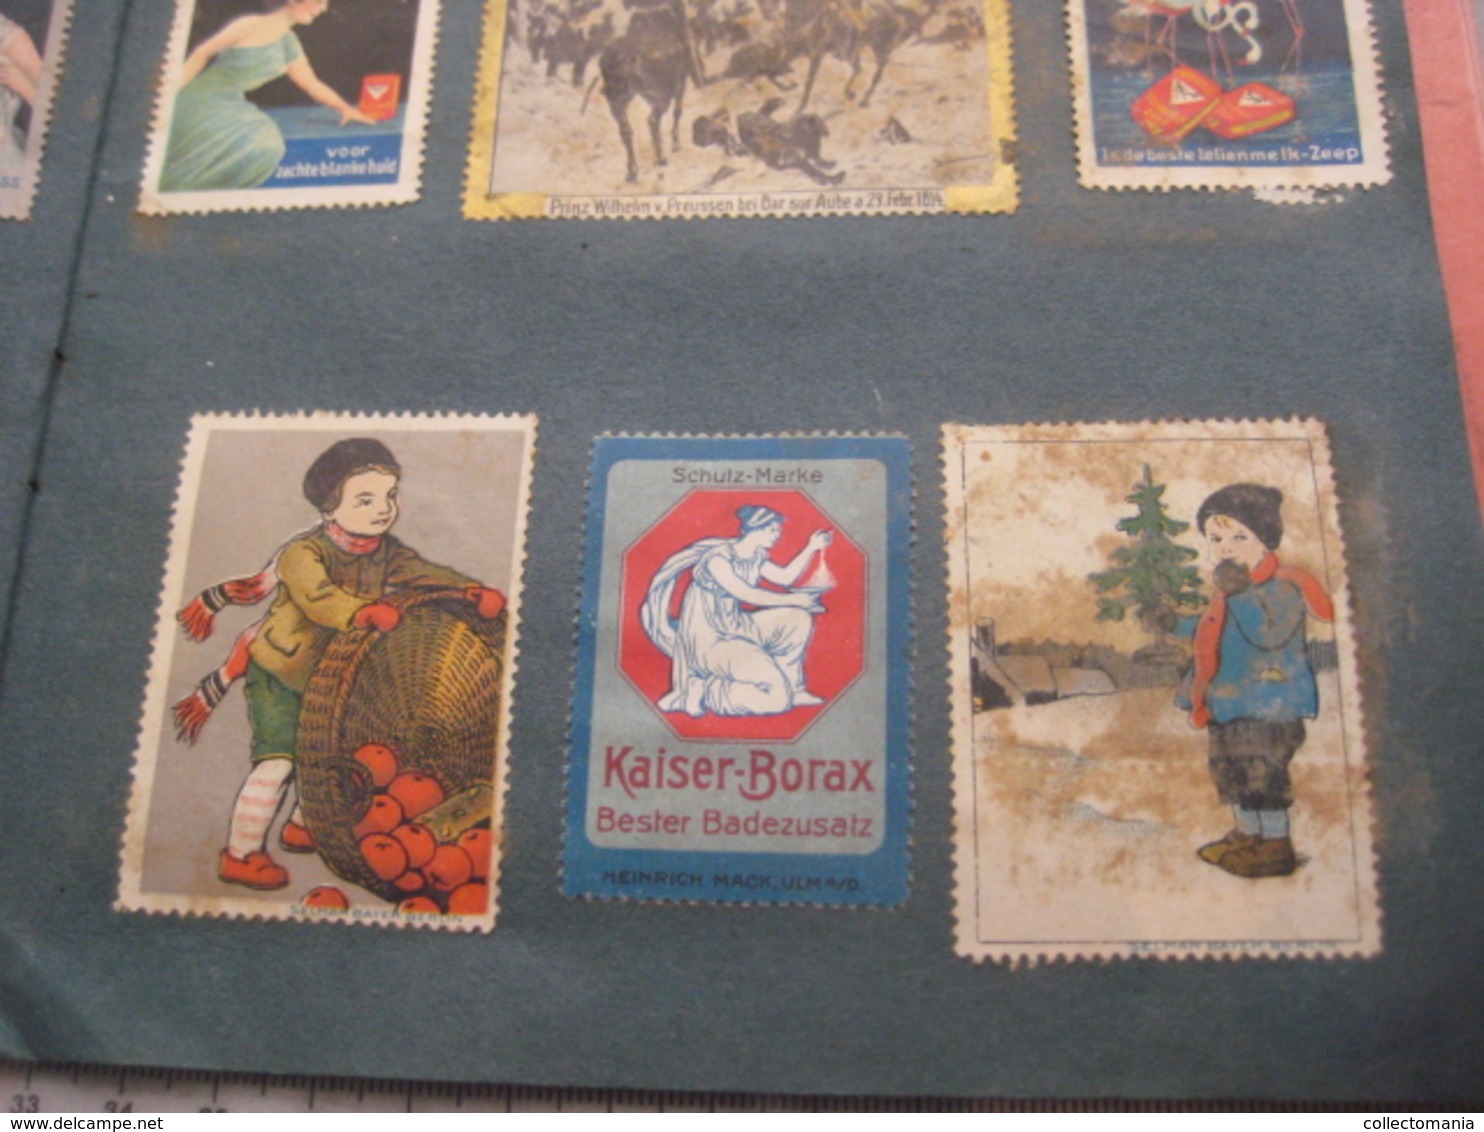 more than 100  PUB advertising poster stamps sluitzegels,small album, all scanned, cinderellas c1910à1920 reklamemarken